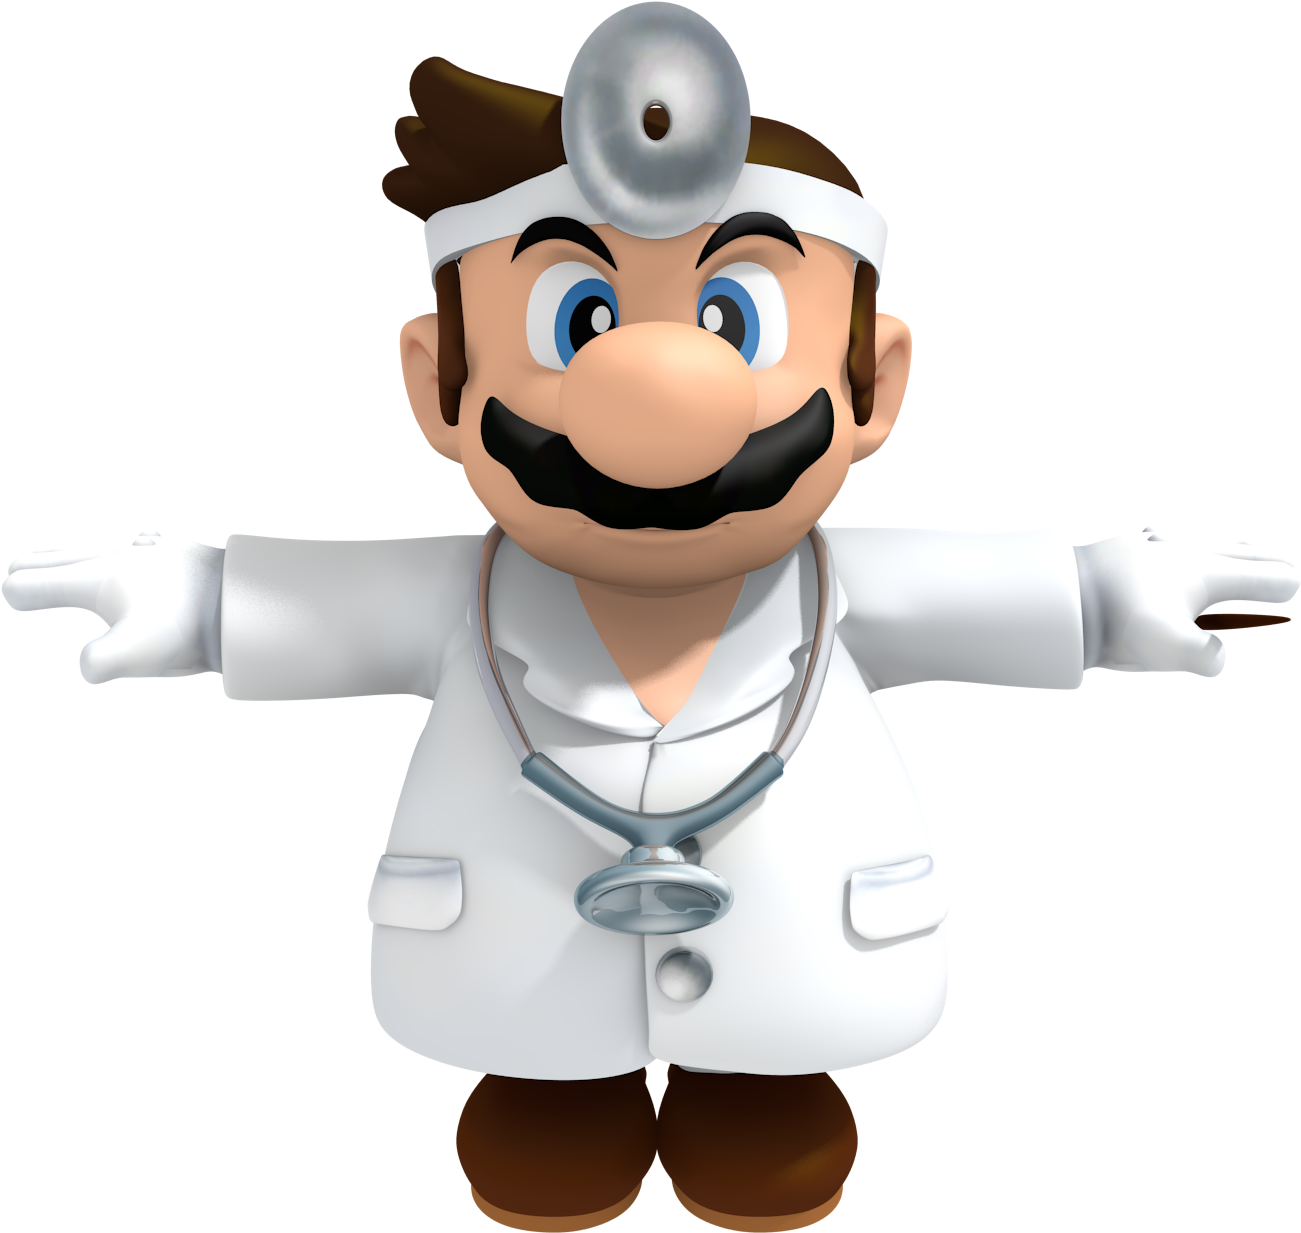 Mario Classic - Dr Mario 3d Model (1500x1500)